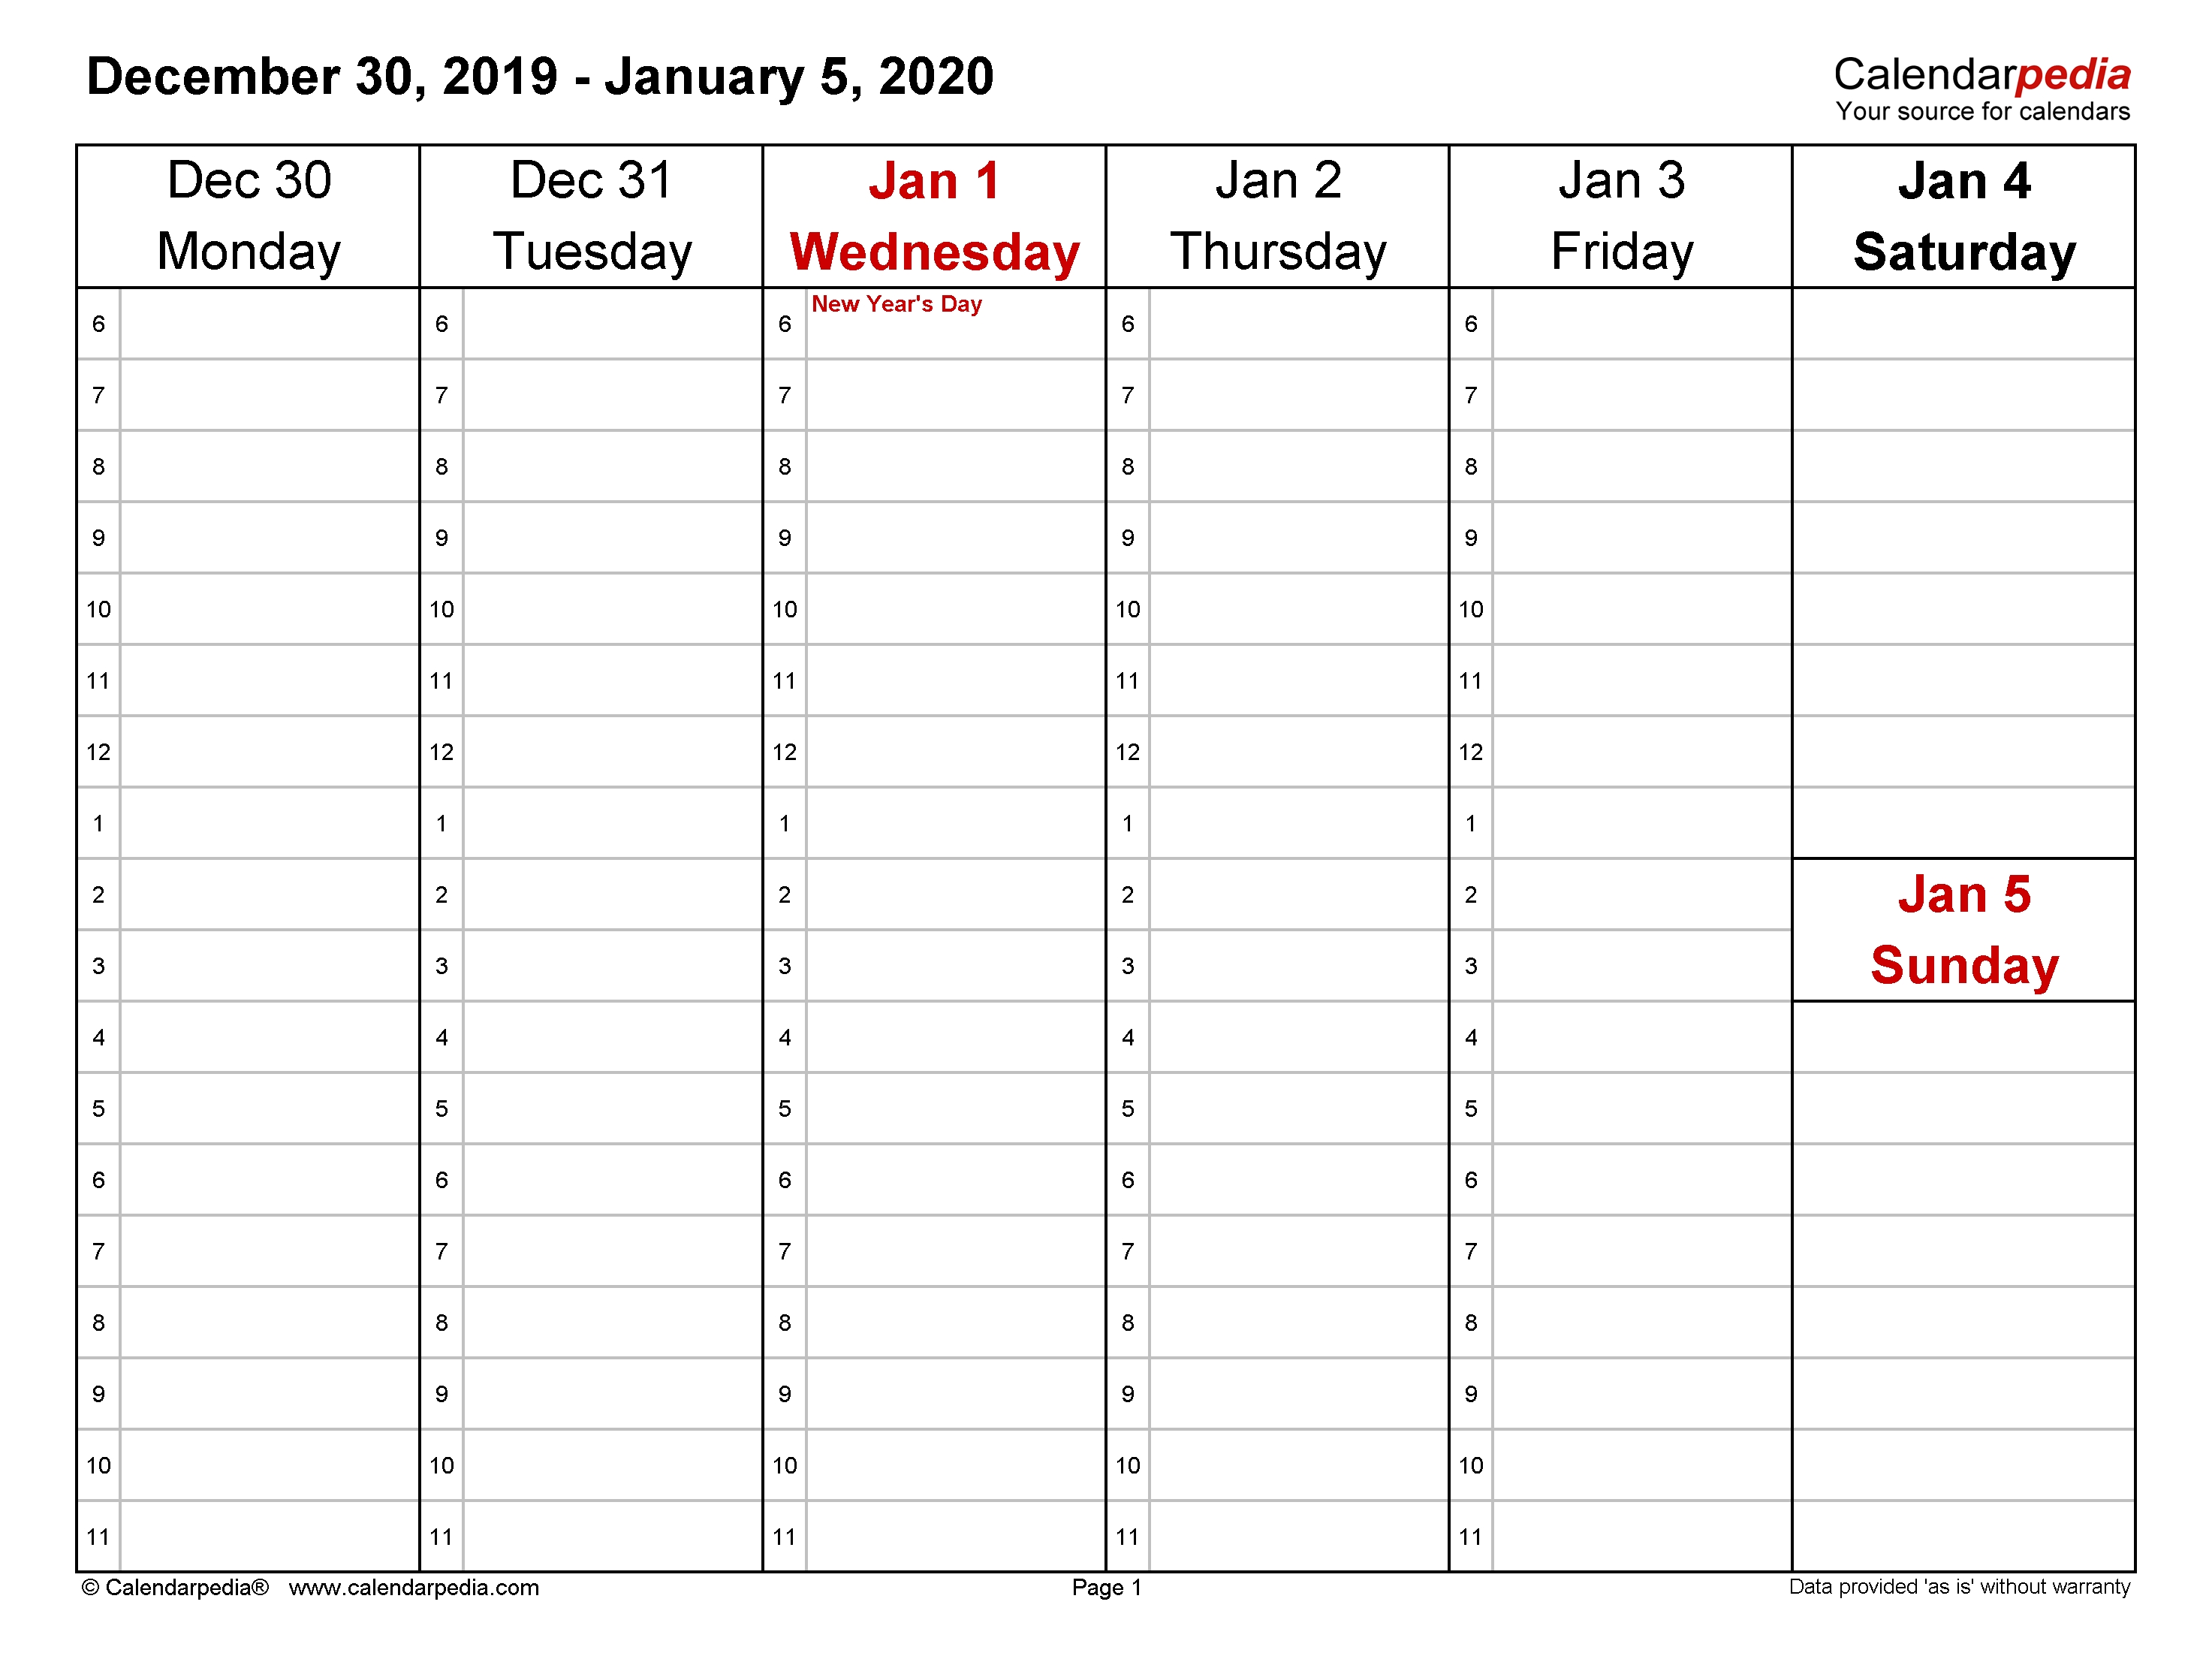 Weekly Calendars 2020 For Word - 12 Free Printable Templates intended for Free Printable One Week Calendar 2020